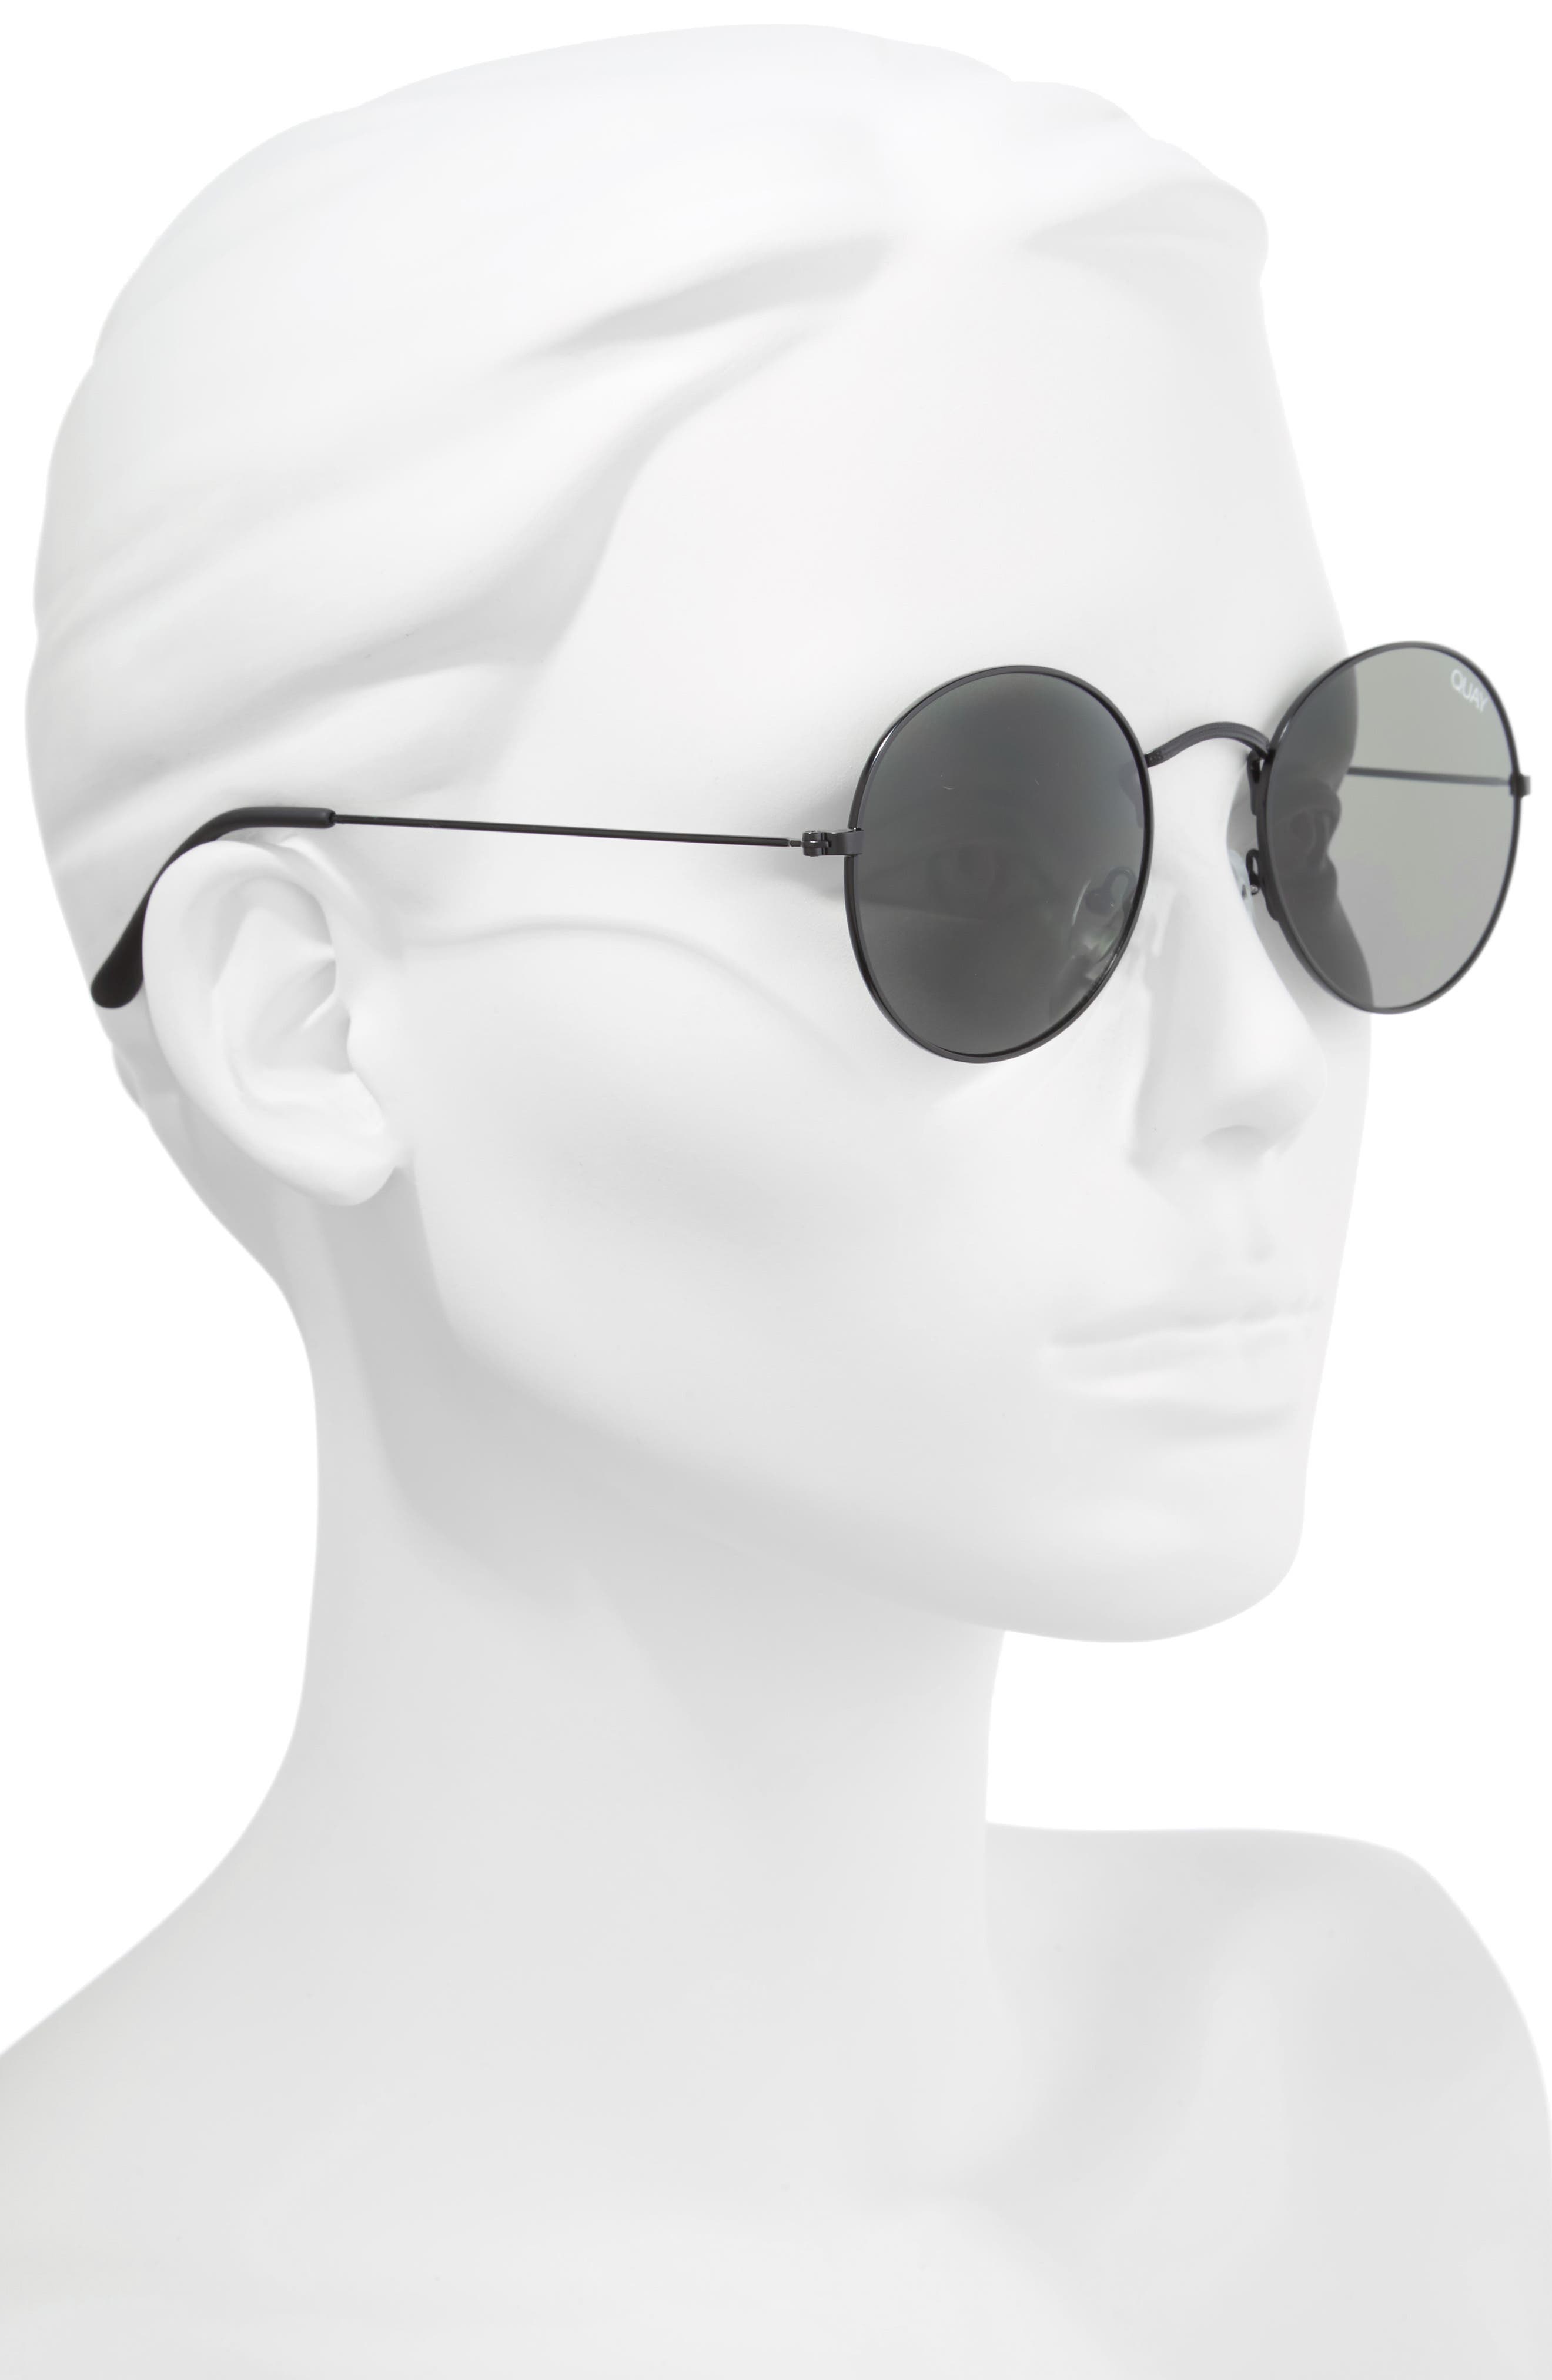 fila sunglasses womens